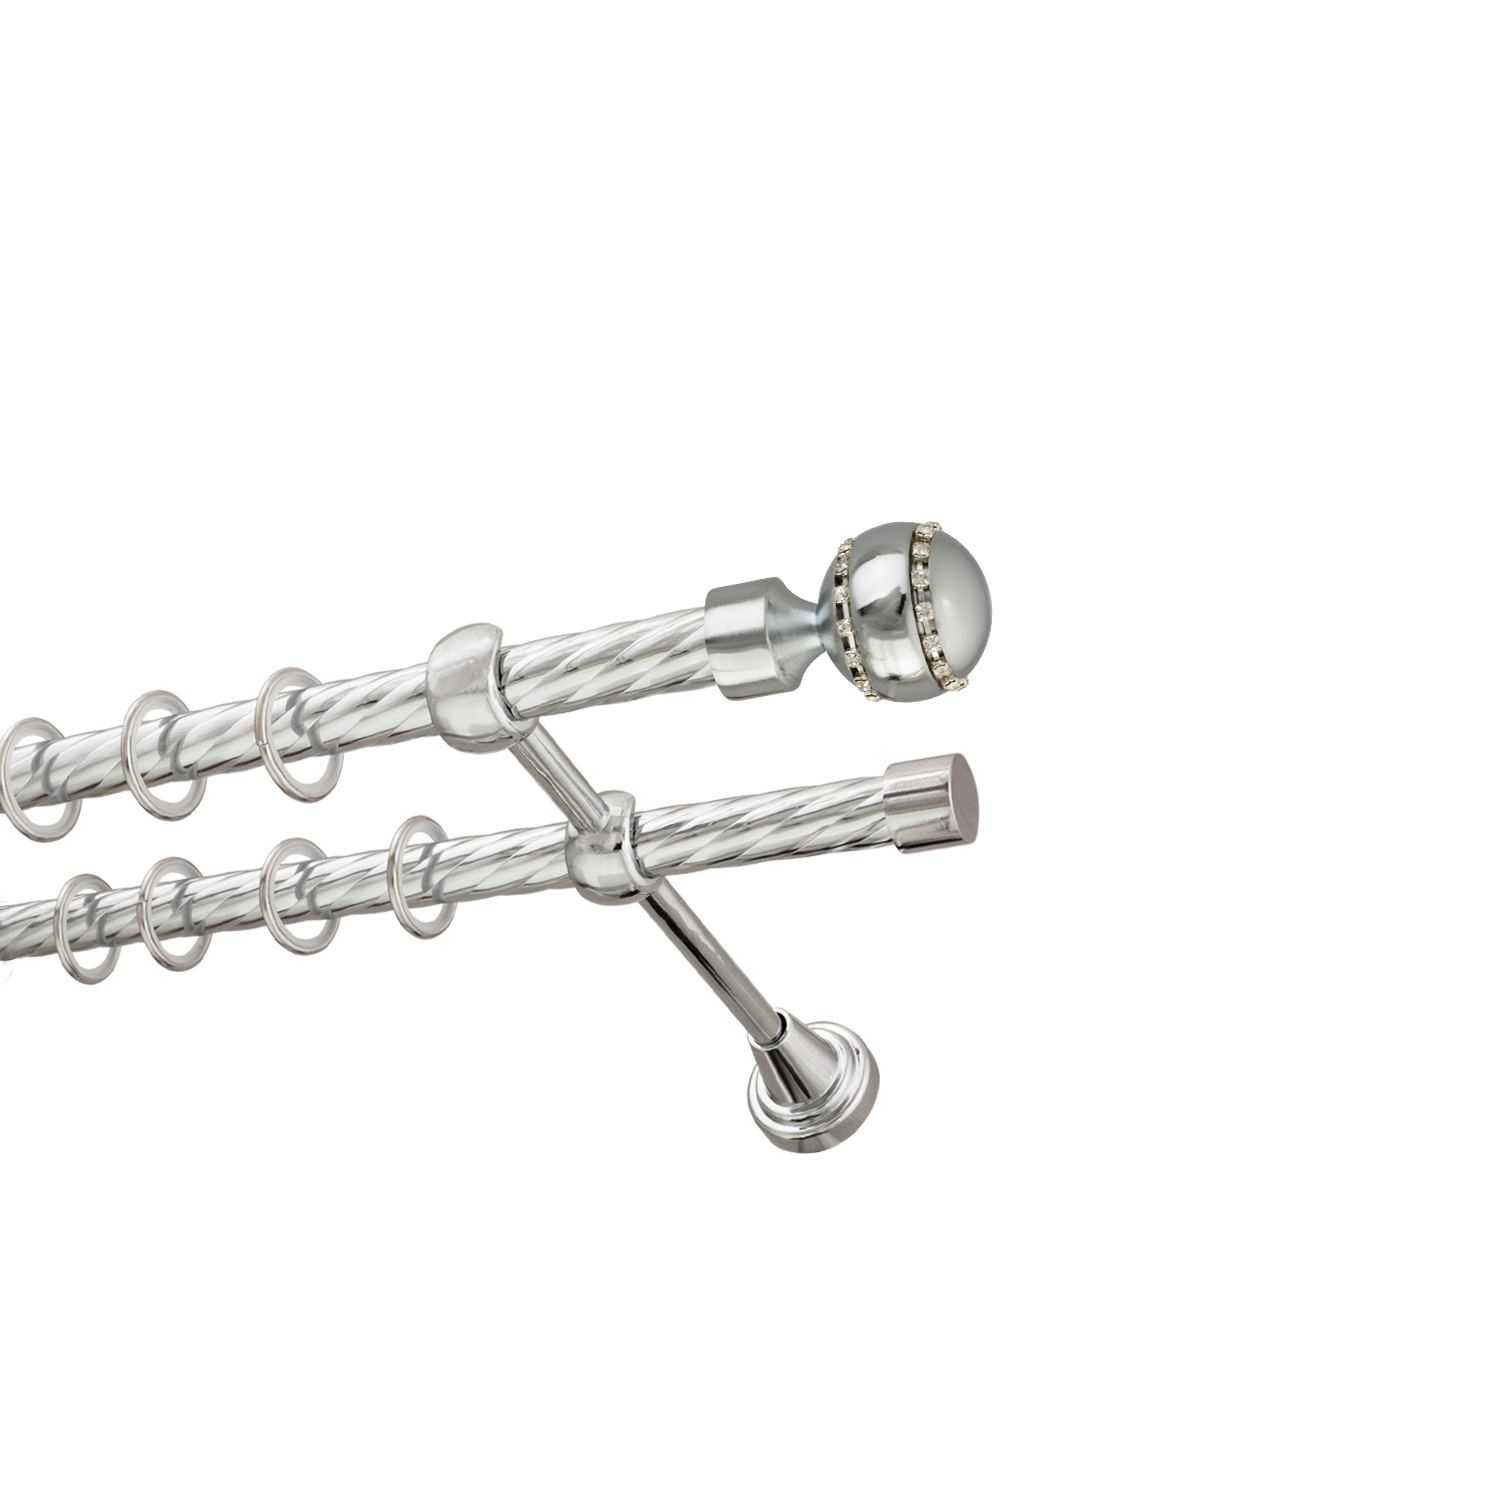 Металлический карниз для штор Модерн, двухрядный 16/16 мм, серебро, витая штанга, длина 140 см - фото Wikidecor.ru